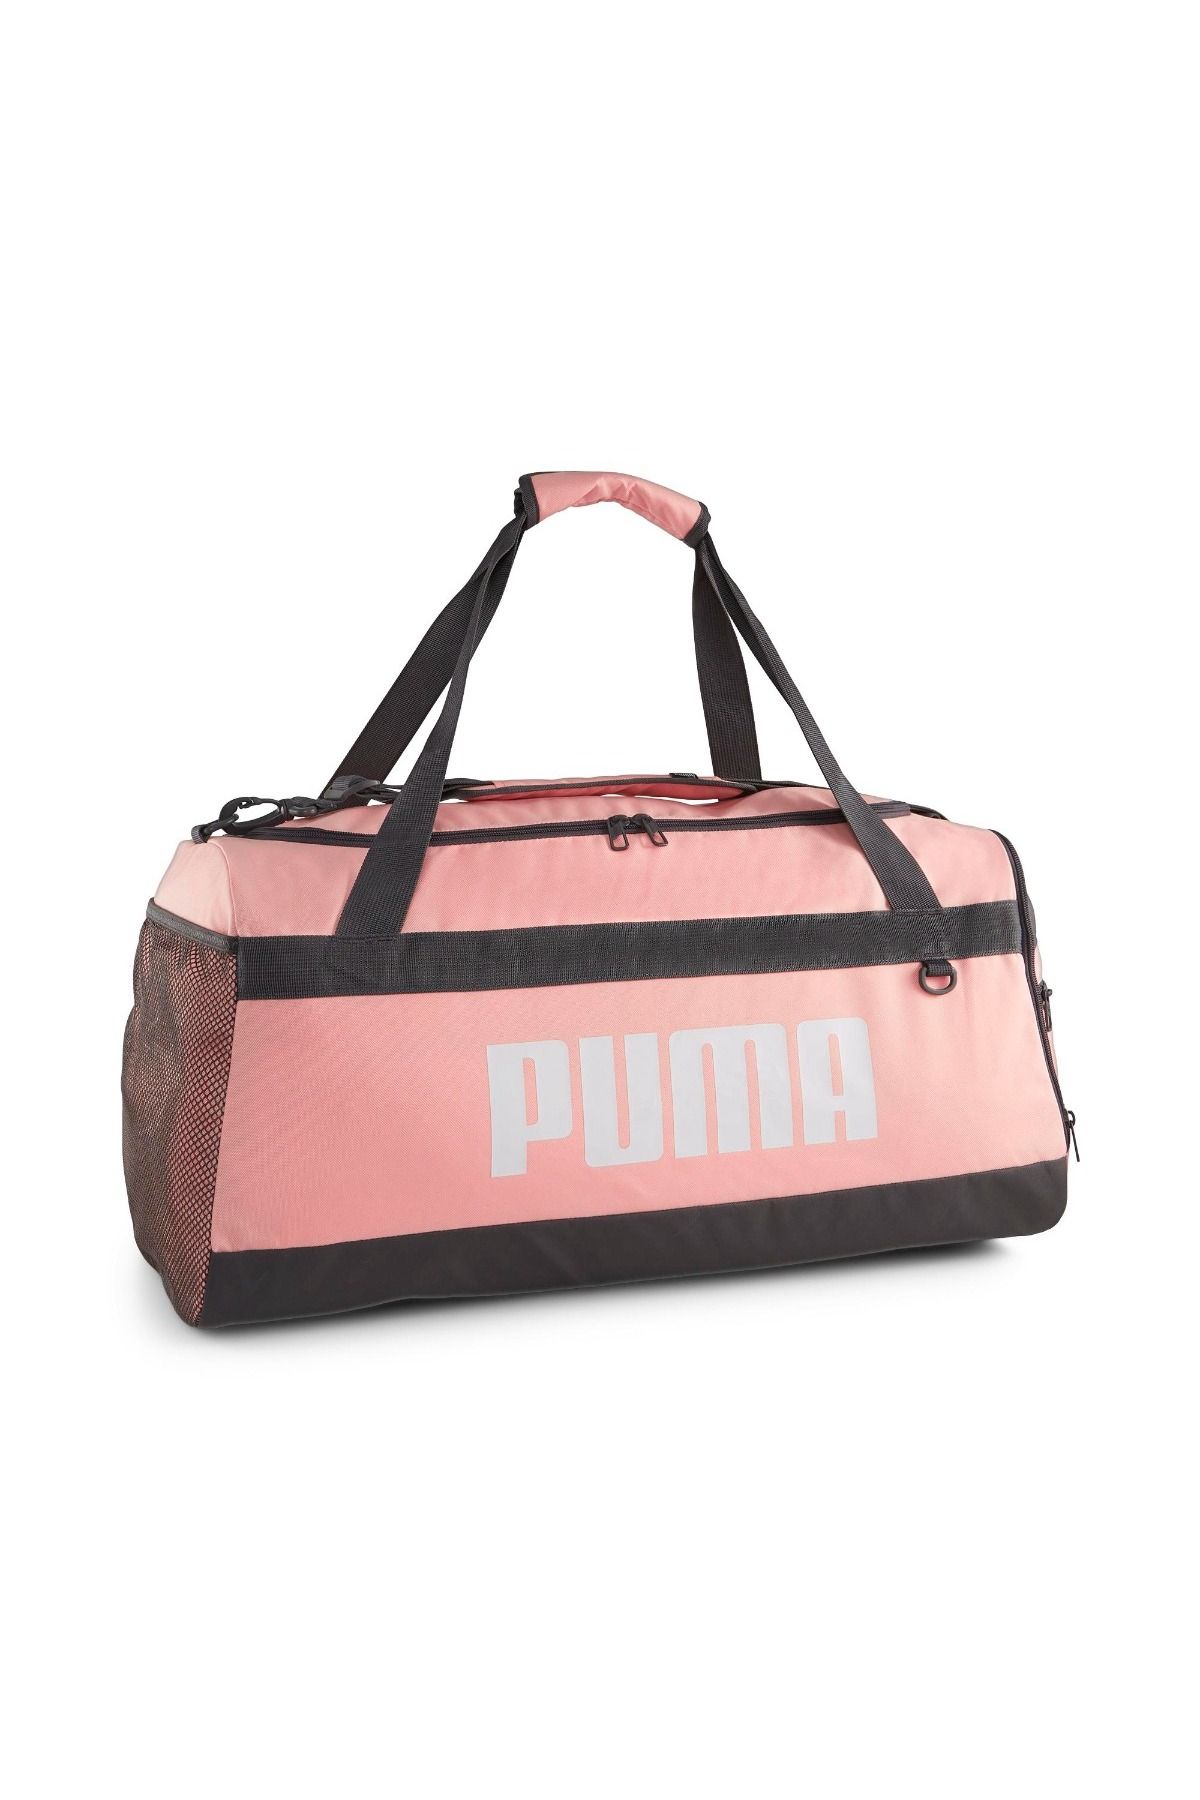 Puma Challenger Duffel M یونیسکس Pink ورزشی